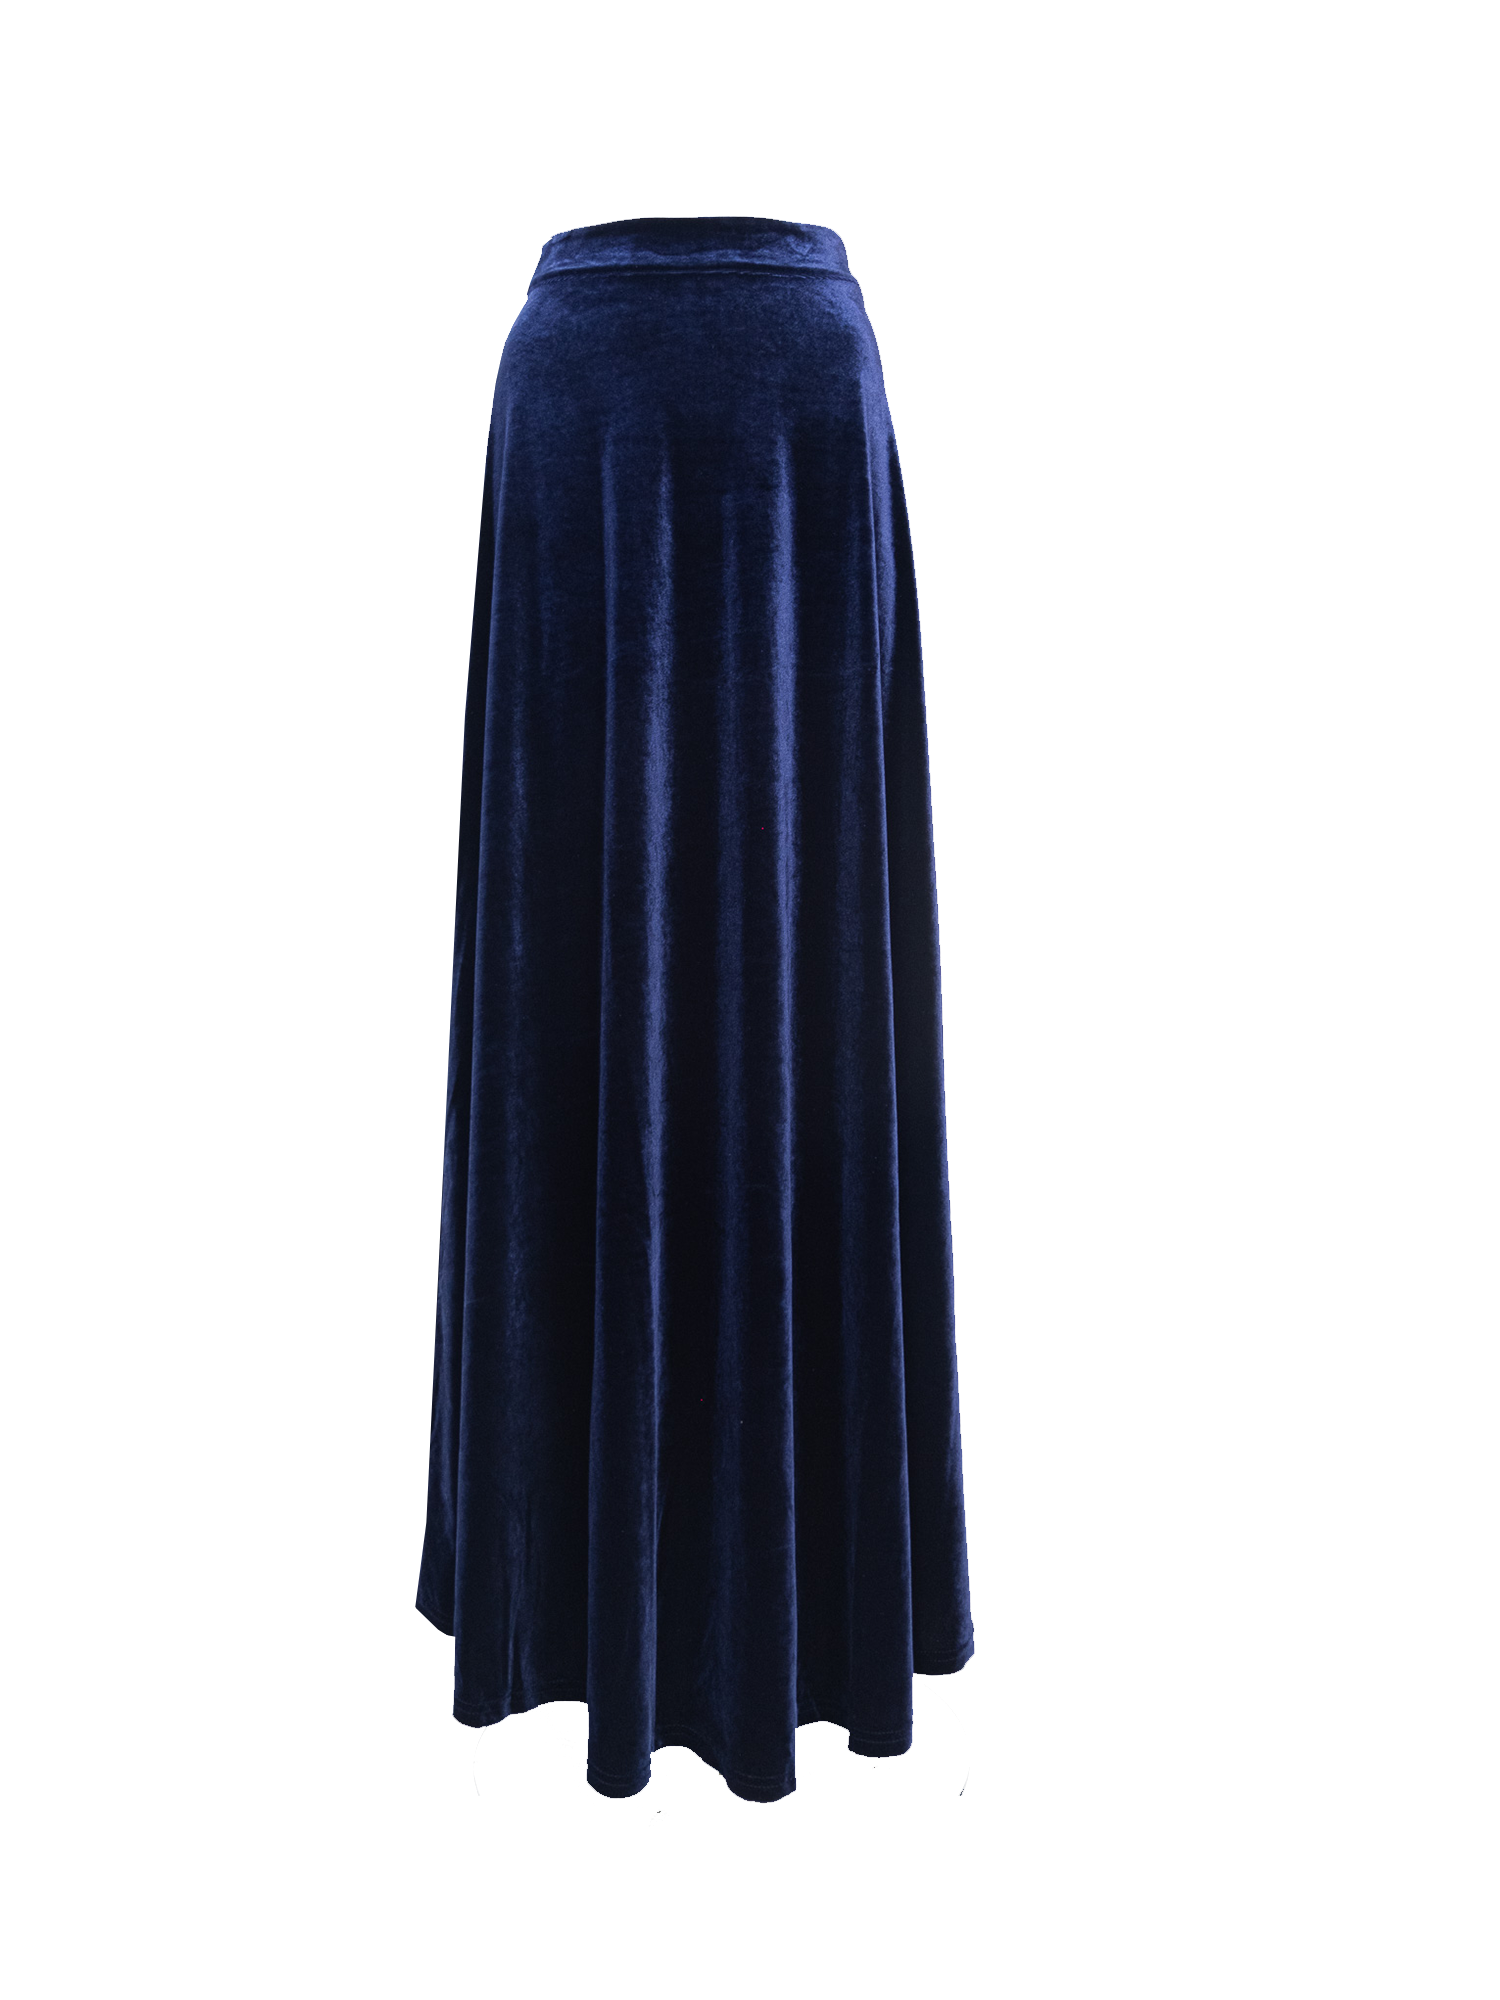 TOSCA - long skirt in blue chenille